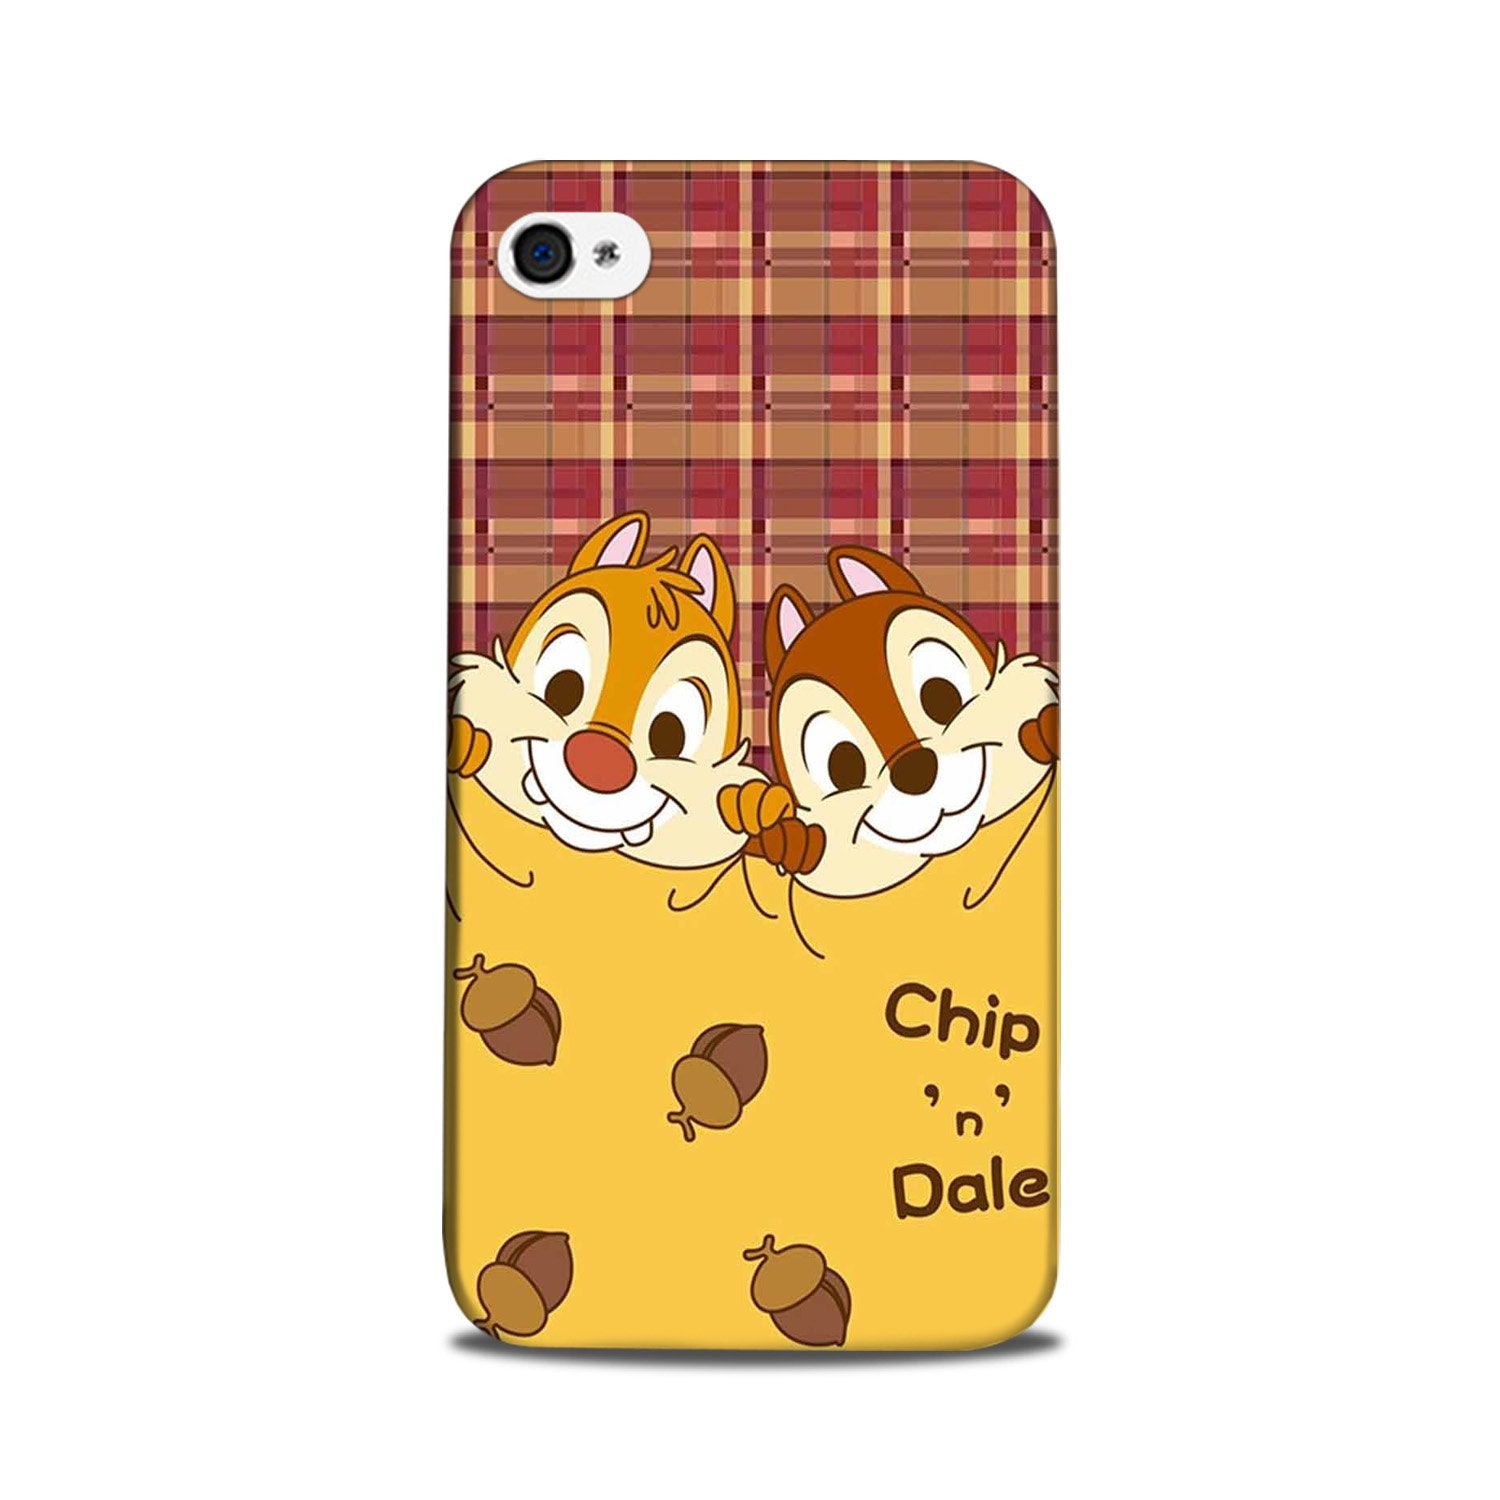 Chip n Dale Mobile Back Case for iPhone 5/ 5s  (Design - 342)